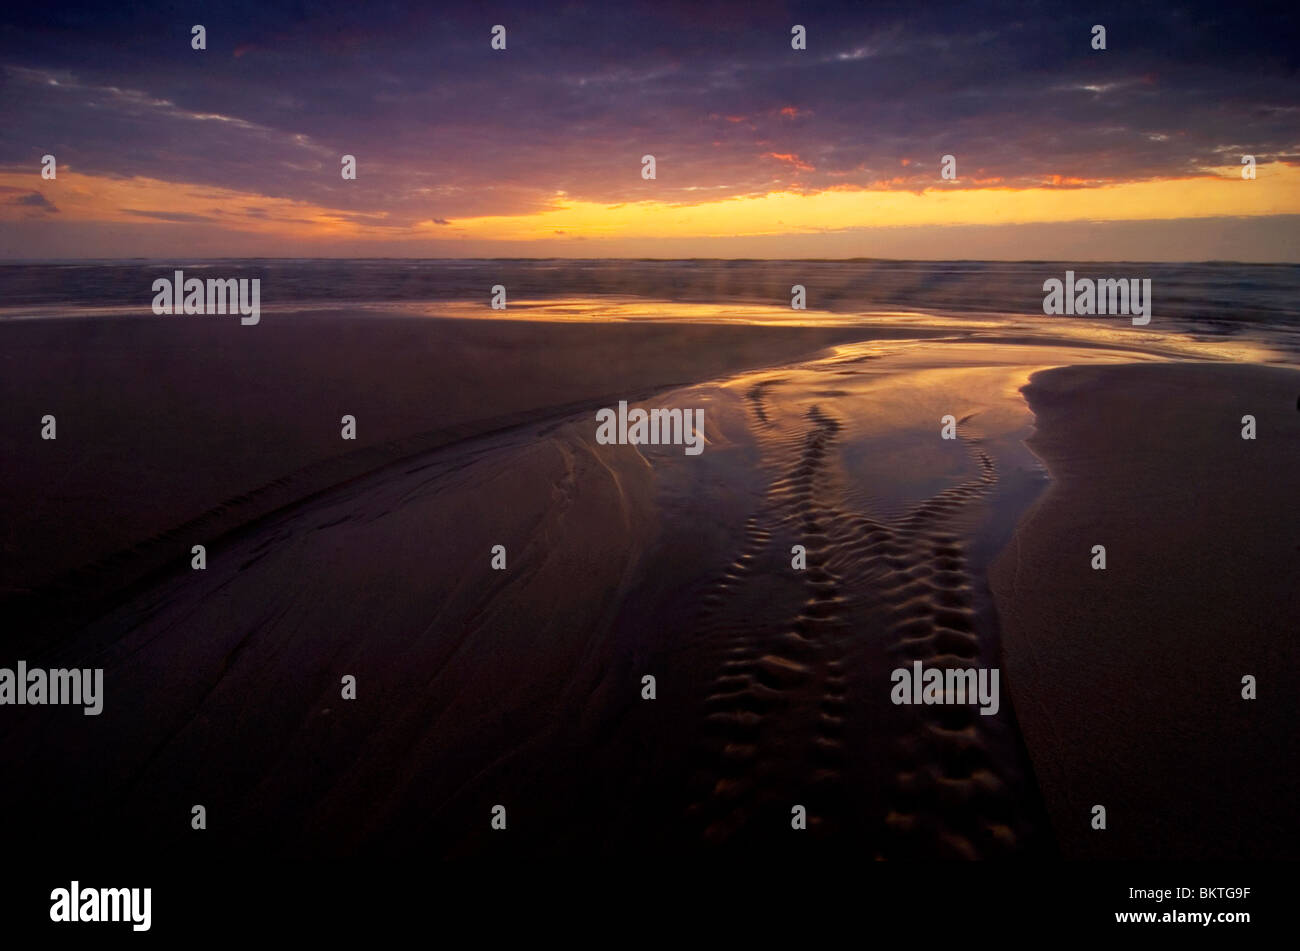 Slikken van Voorne met dramatisch zonsondergang; estuary with mudflats along the dutch coast and dramatic sunset Stock Photo